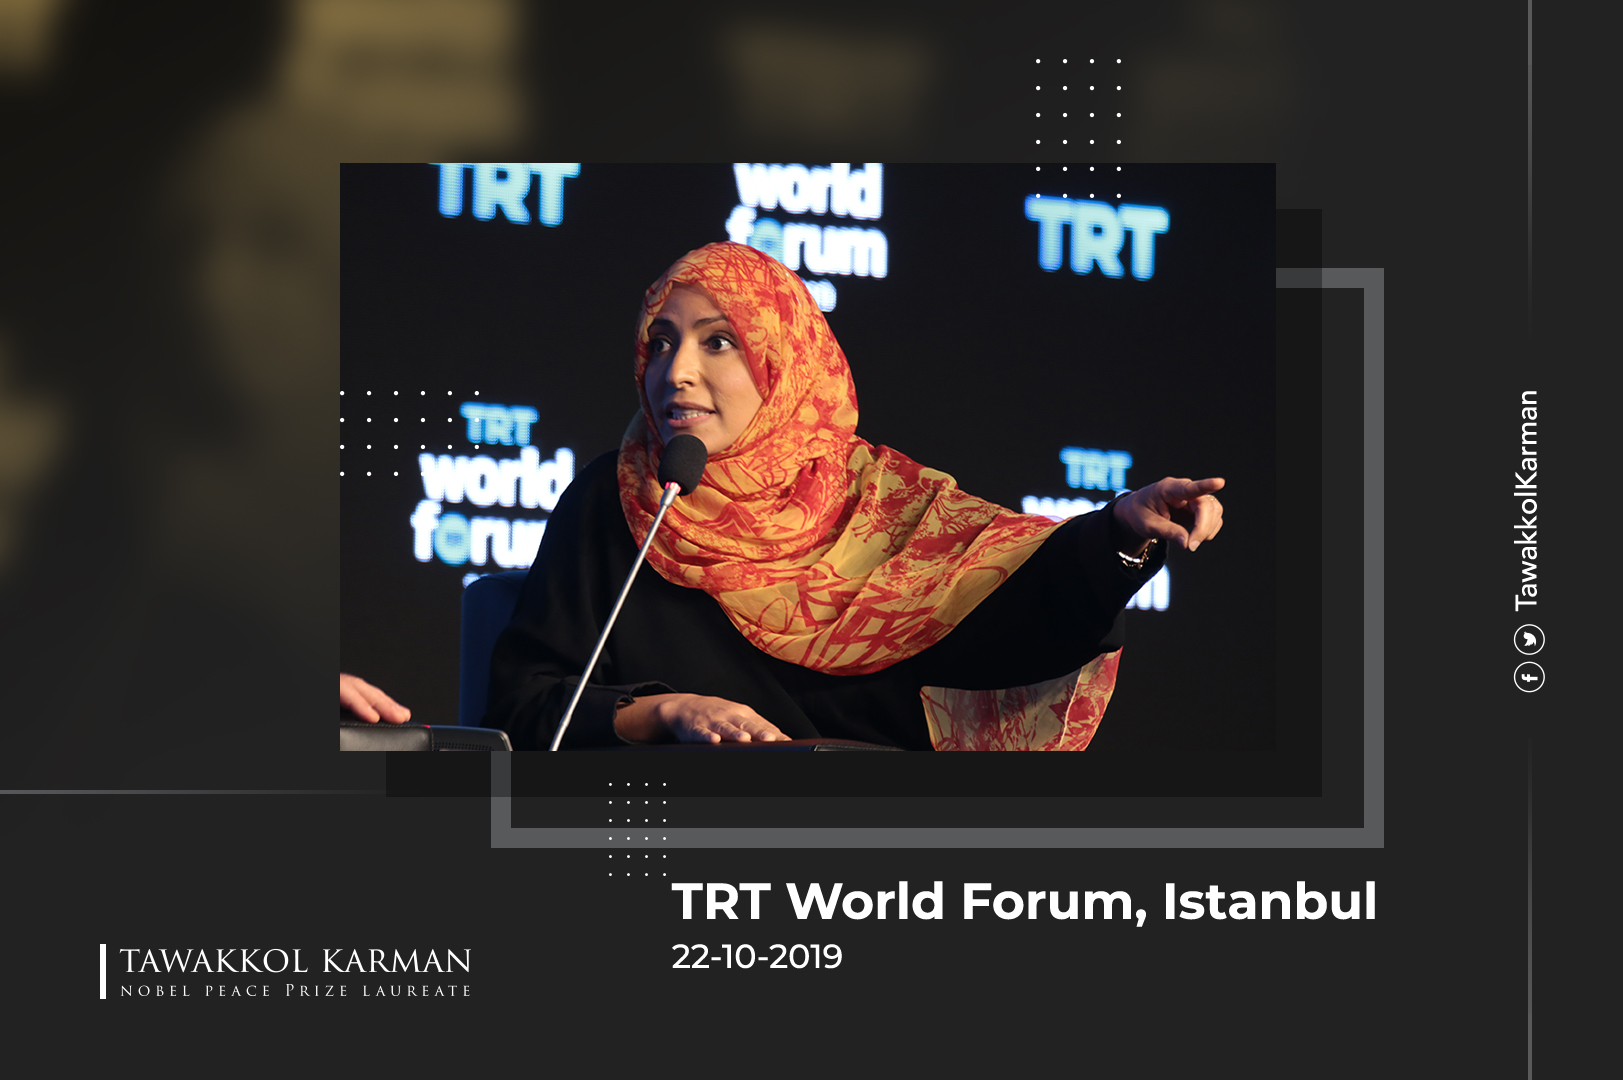 Participation of Tawakkol Karman at the TRT World Forum, Istanbul